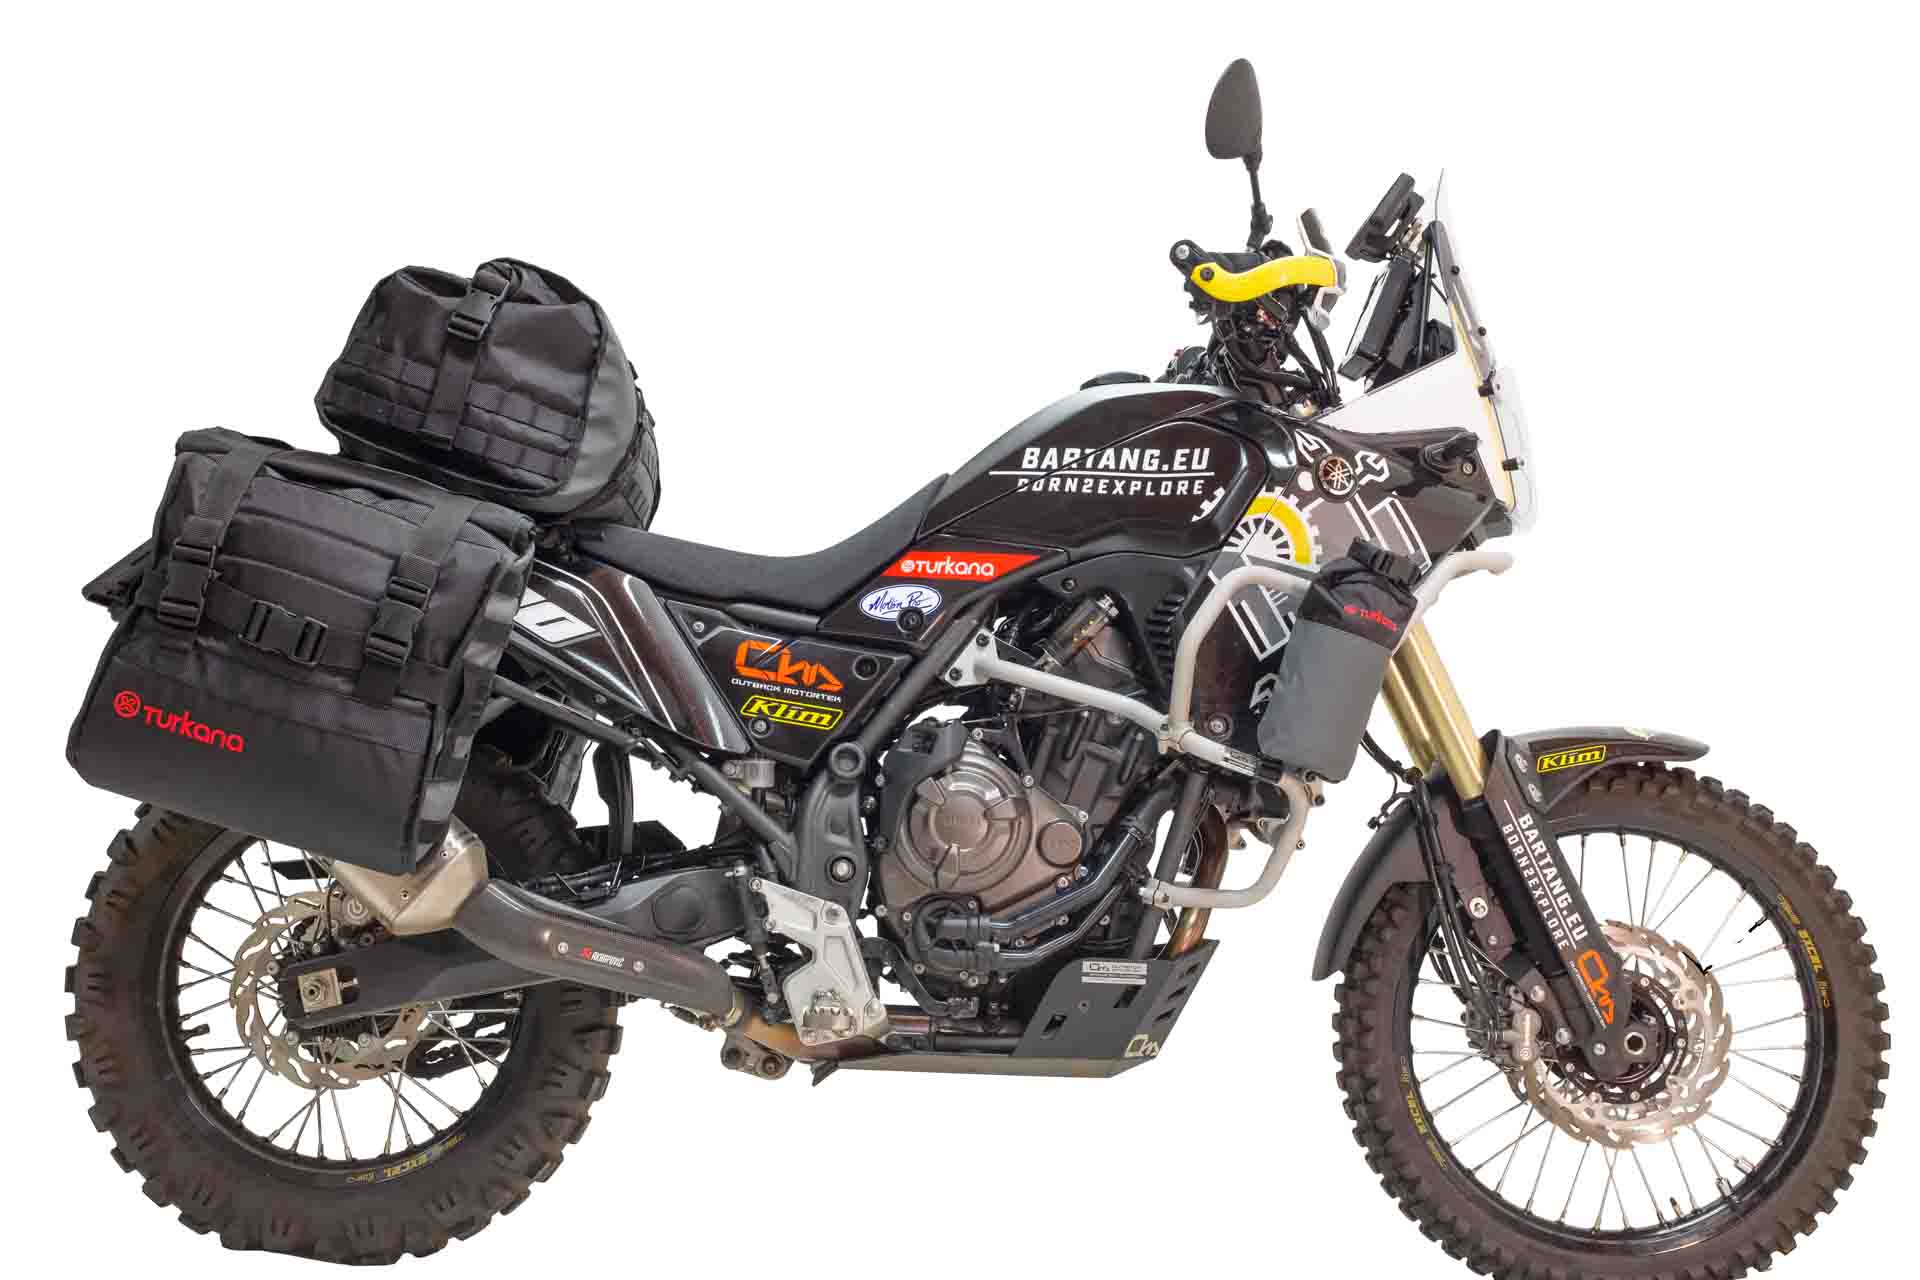 Turkanagear HippoHips 30L each motorcycle soft luggage waterproof dustproof inner dry bags1.jpg